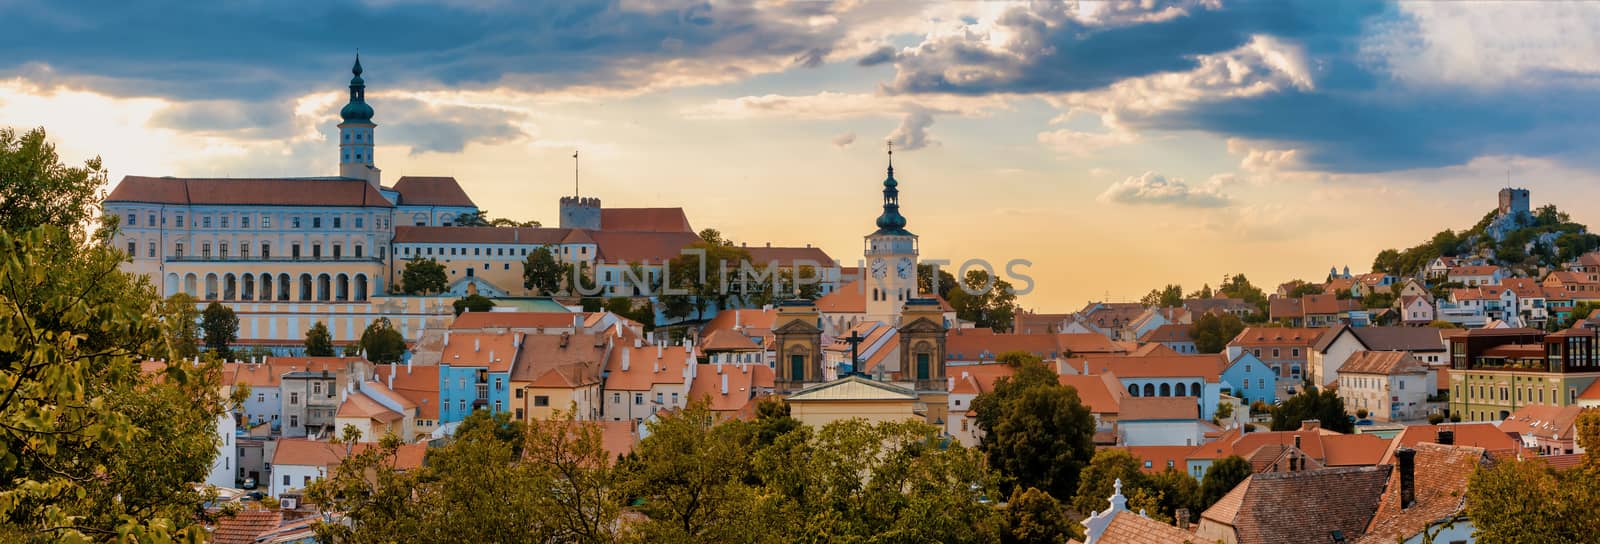 Mikulov city and castle, Czech Republic by artush